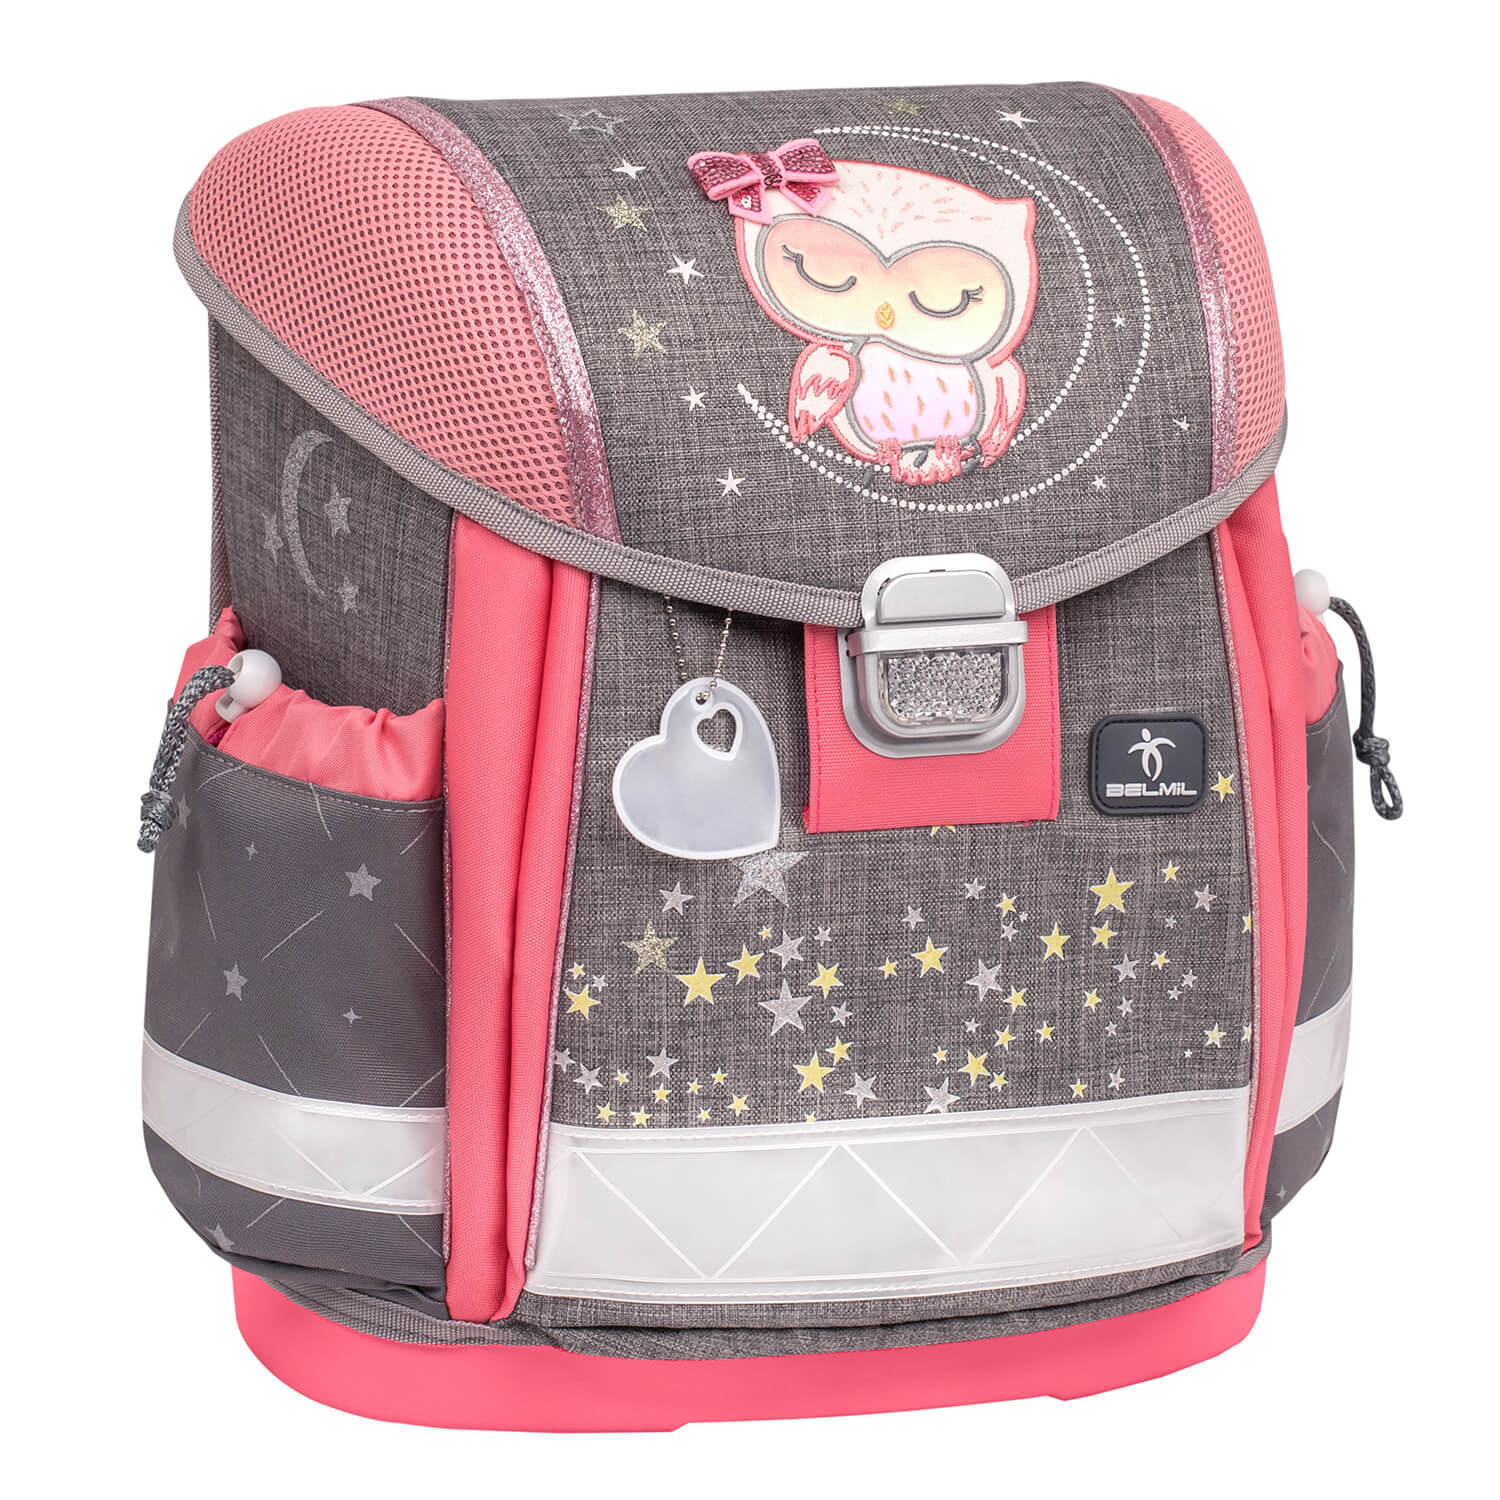 Classy Little Owl schoolbag set 4 pcs